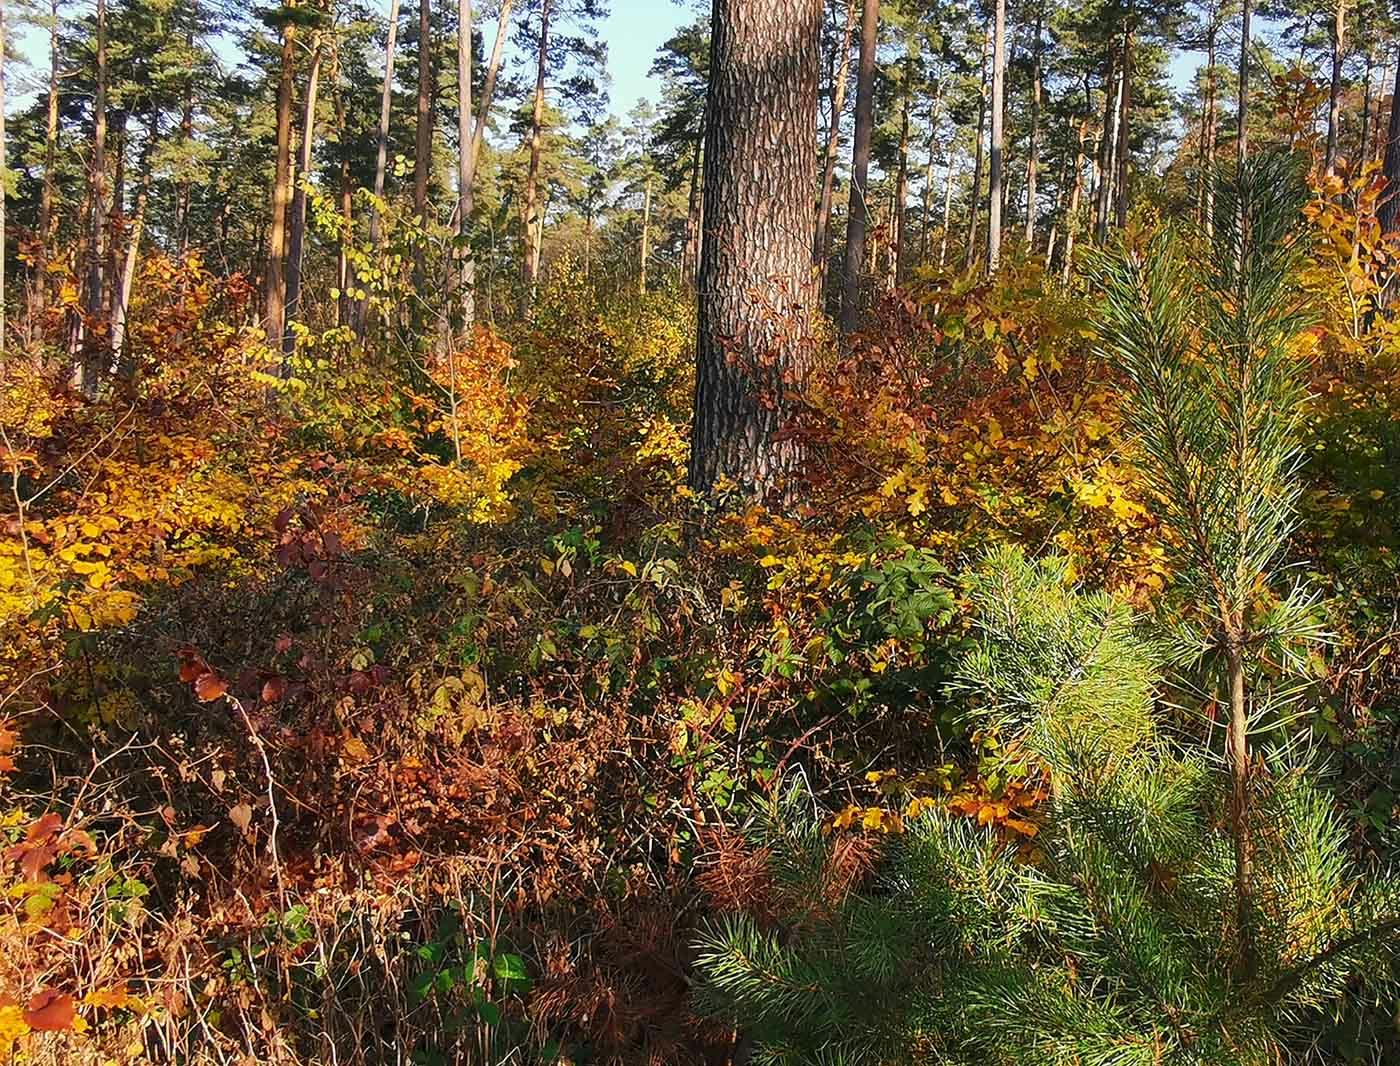 Image of the mixed forest Zehrensdorf in Brandenburg, Germany.